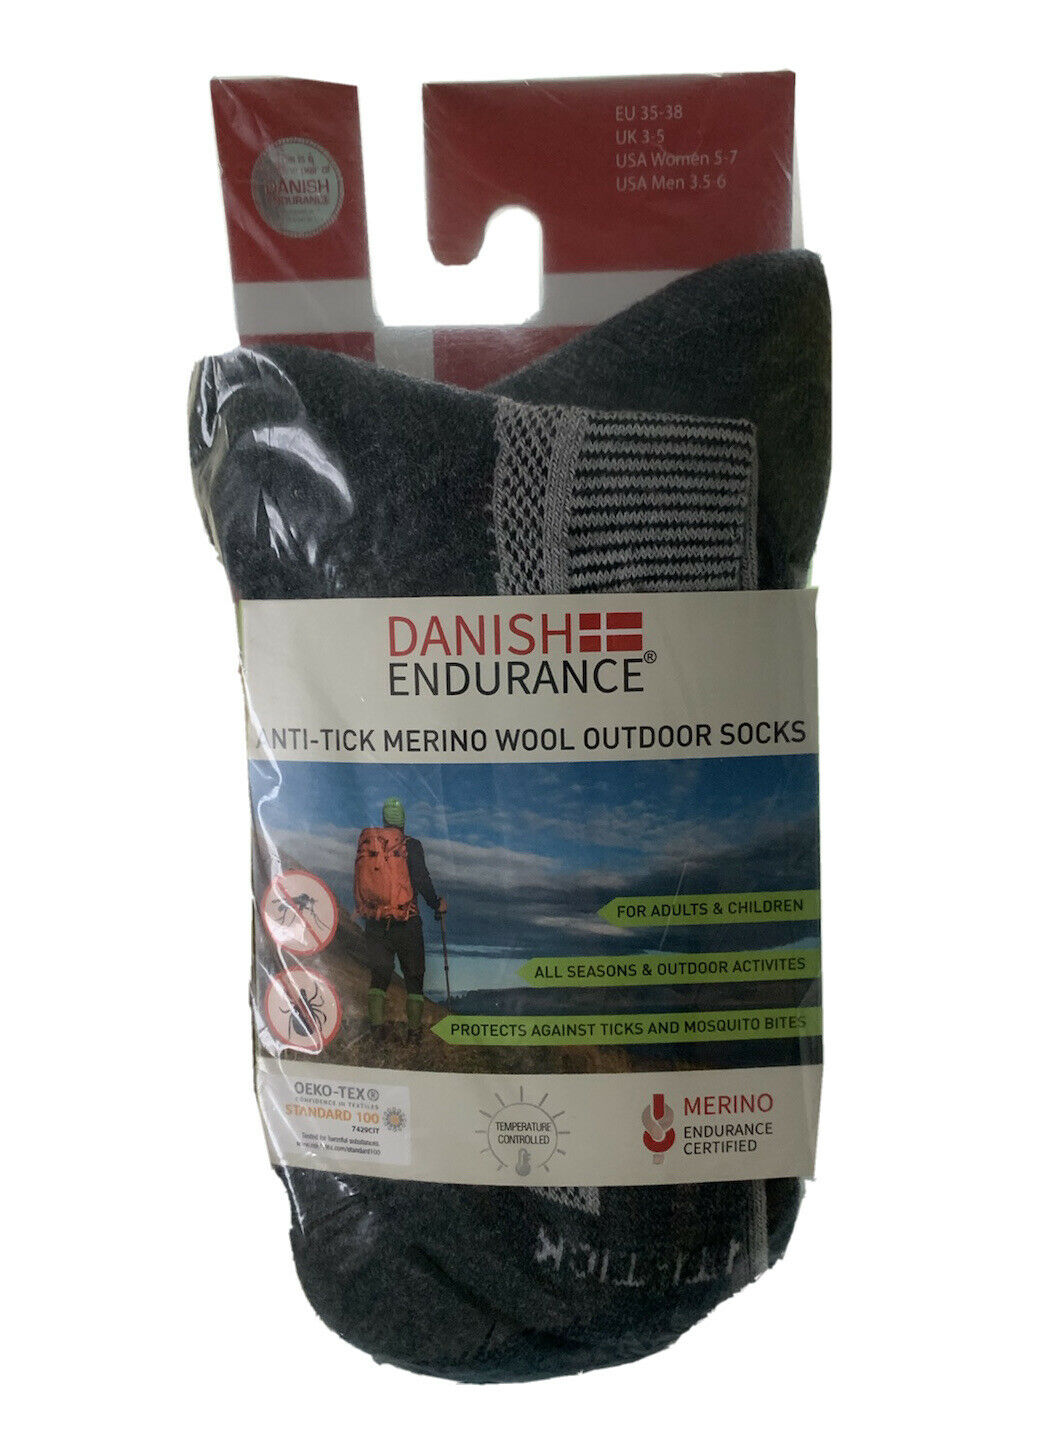 Danish Endurance, anti-tick merino wool outdoor socks HEAVY DUTY